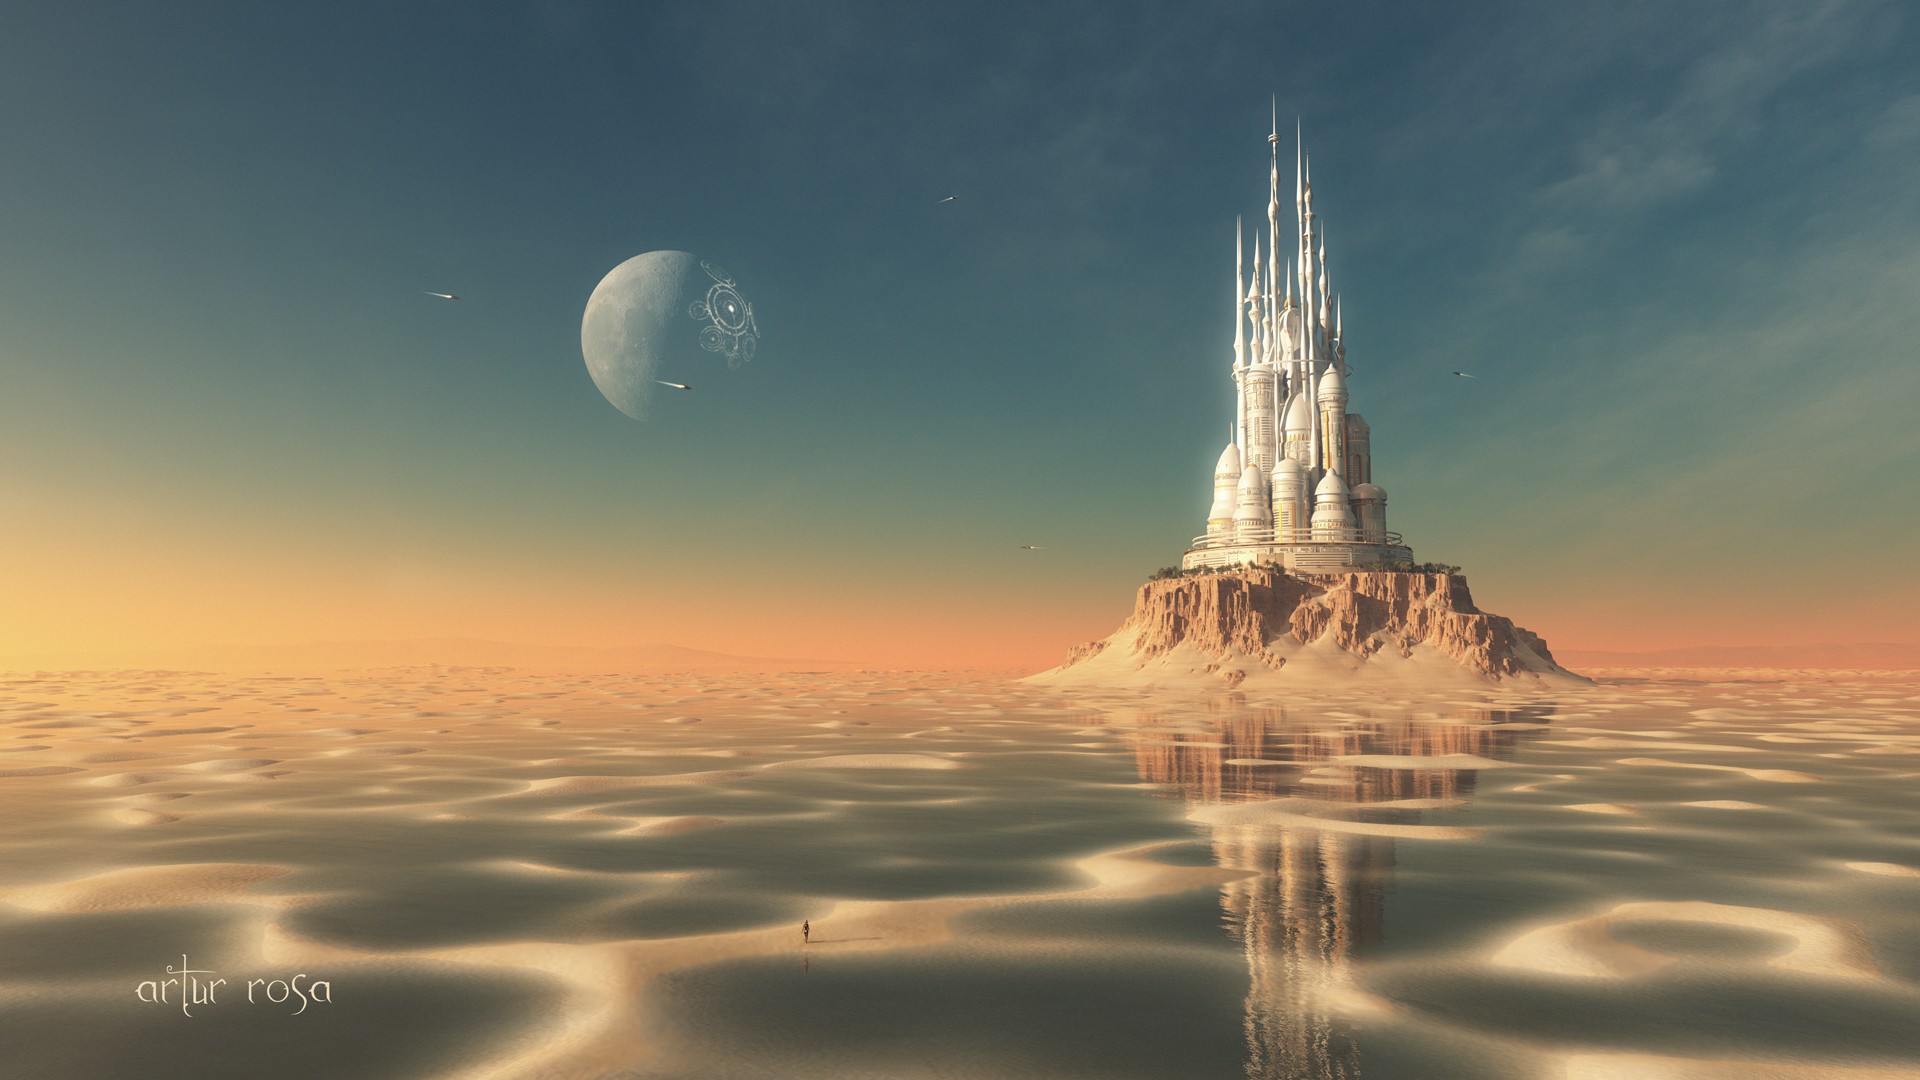 Fantasy Art Sky Futuristic Science Fiction Planet Building Artur Rosa Digital Art 1920x1080